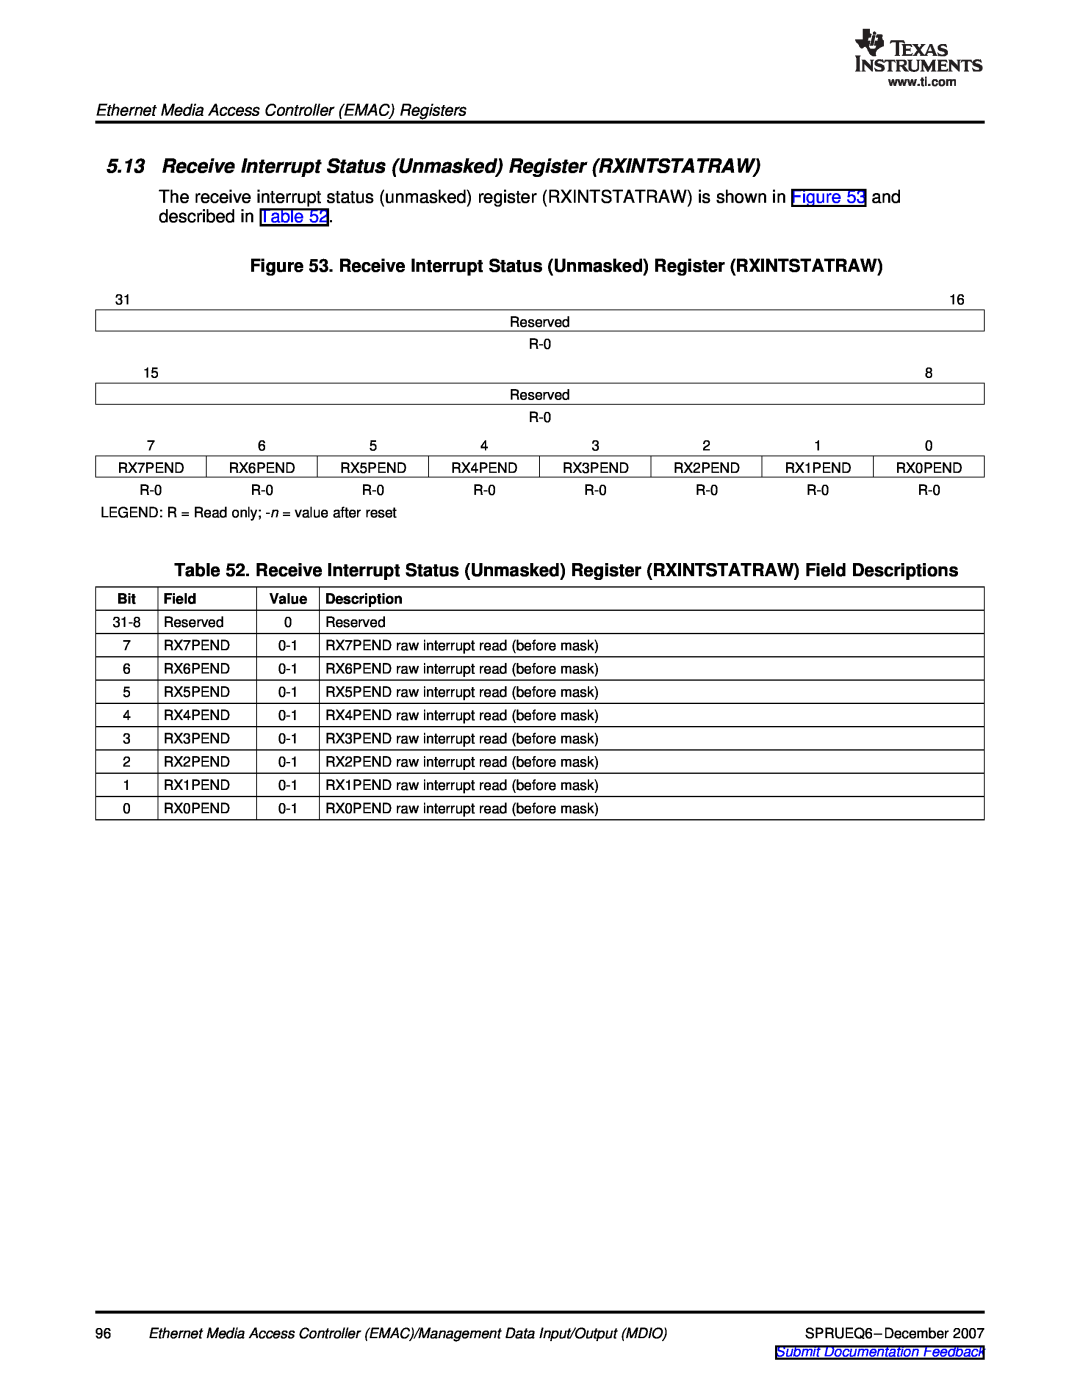 Texas Instruments TMS320DM646x manual Receive Interrupt Status Unmasked Register RXINTSTATRAW, Field, Value, Description 